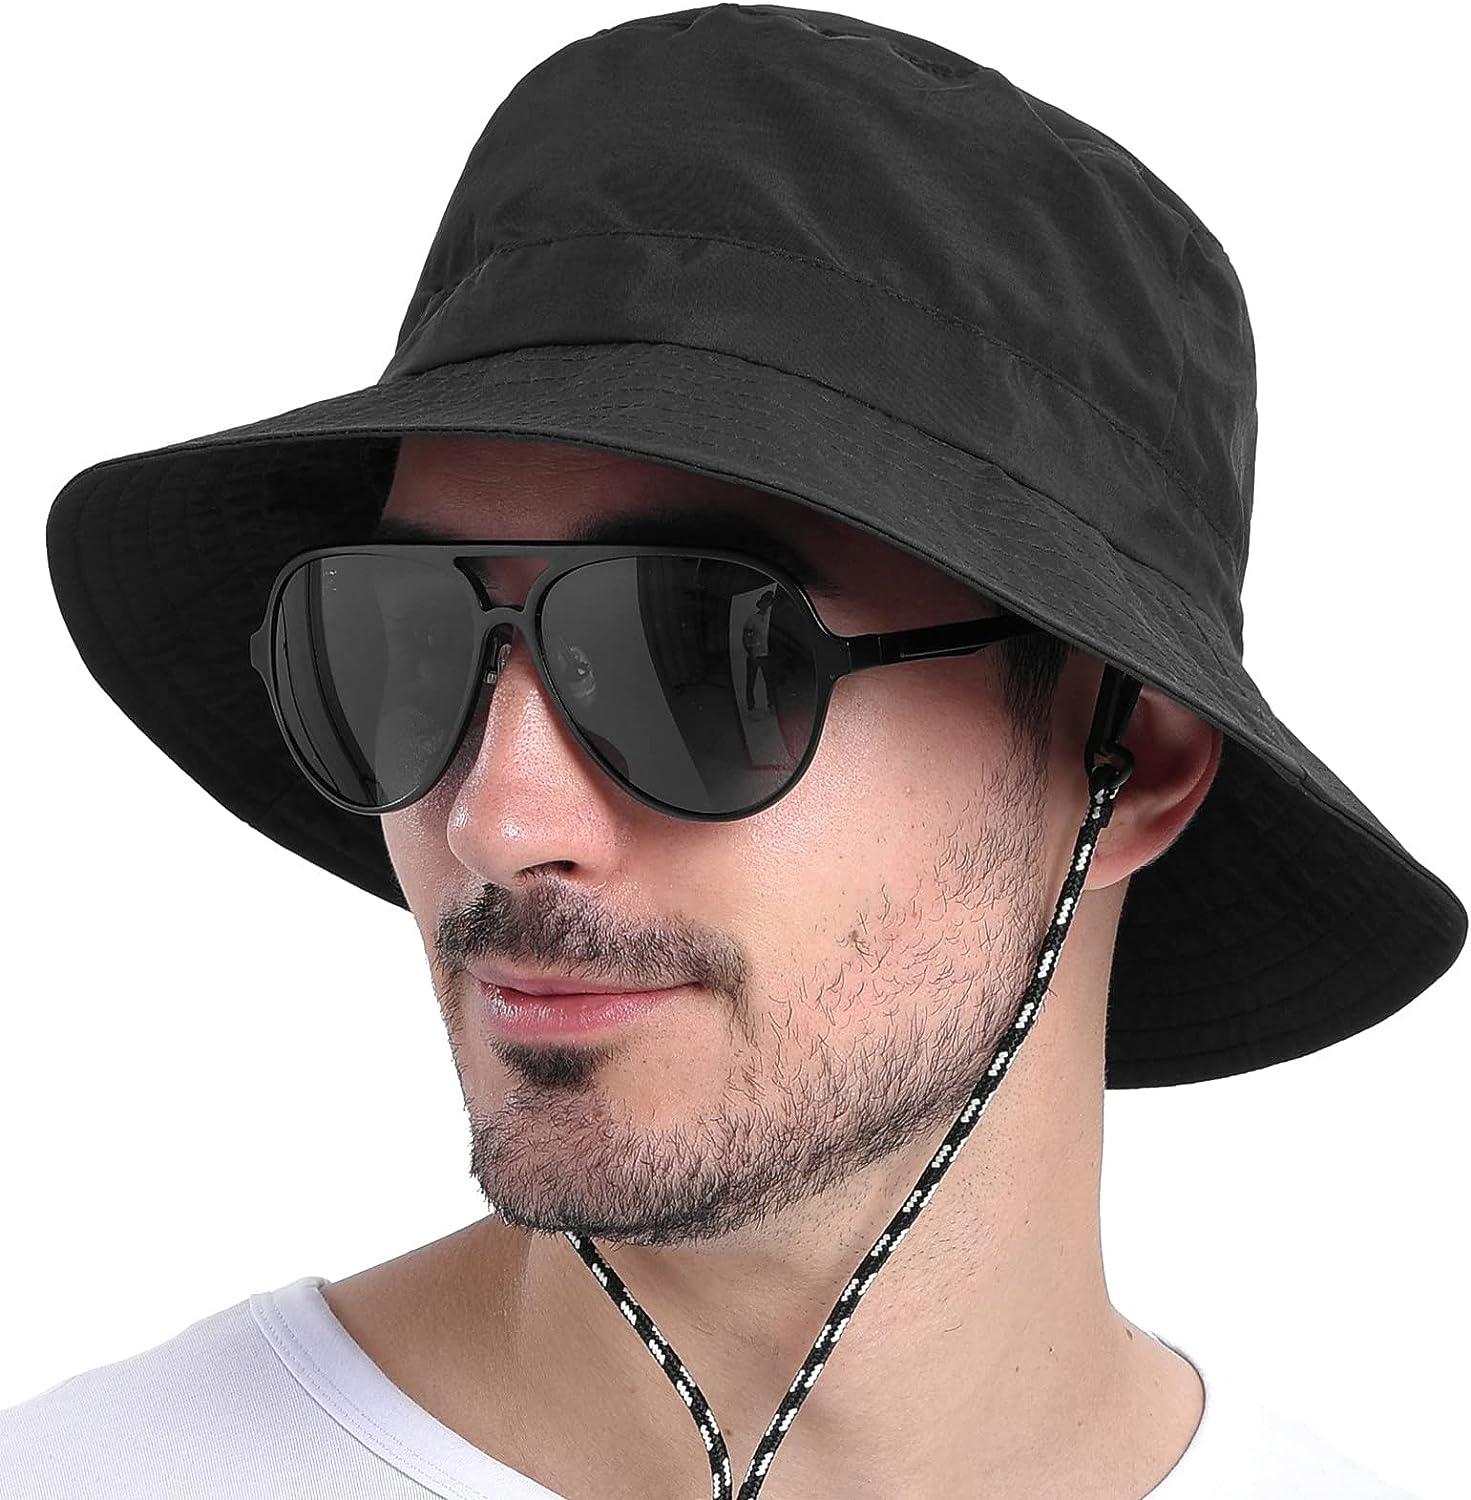 FEICUI Men Women Outdoor Bucket Hat Quick Dry Packable Boonie Hat UV  Protection Sun Hat Black